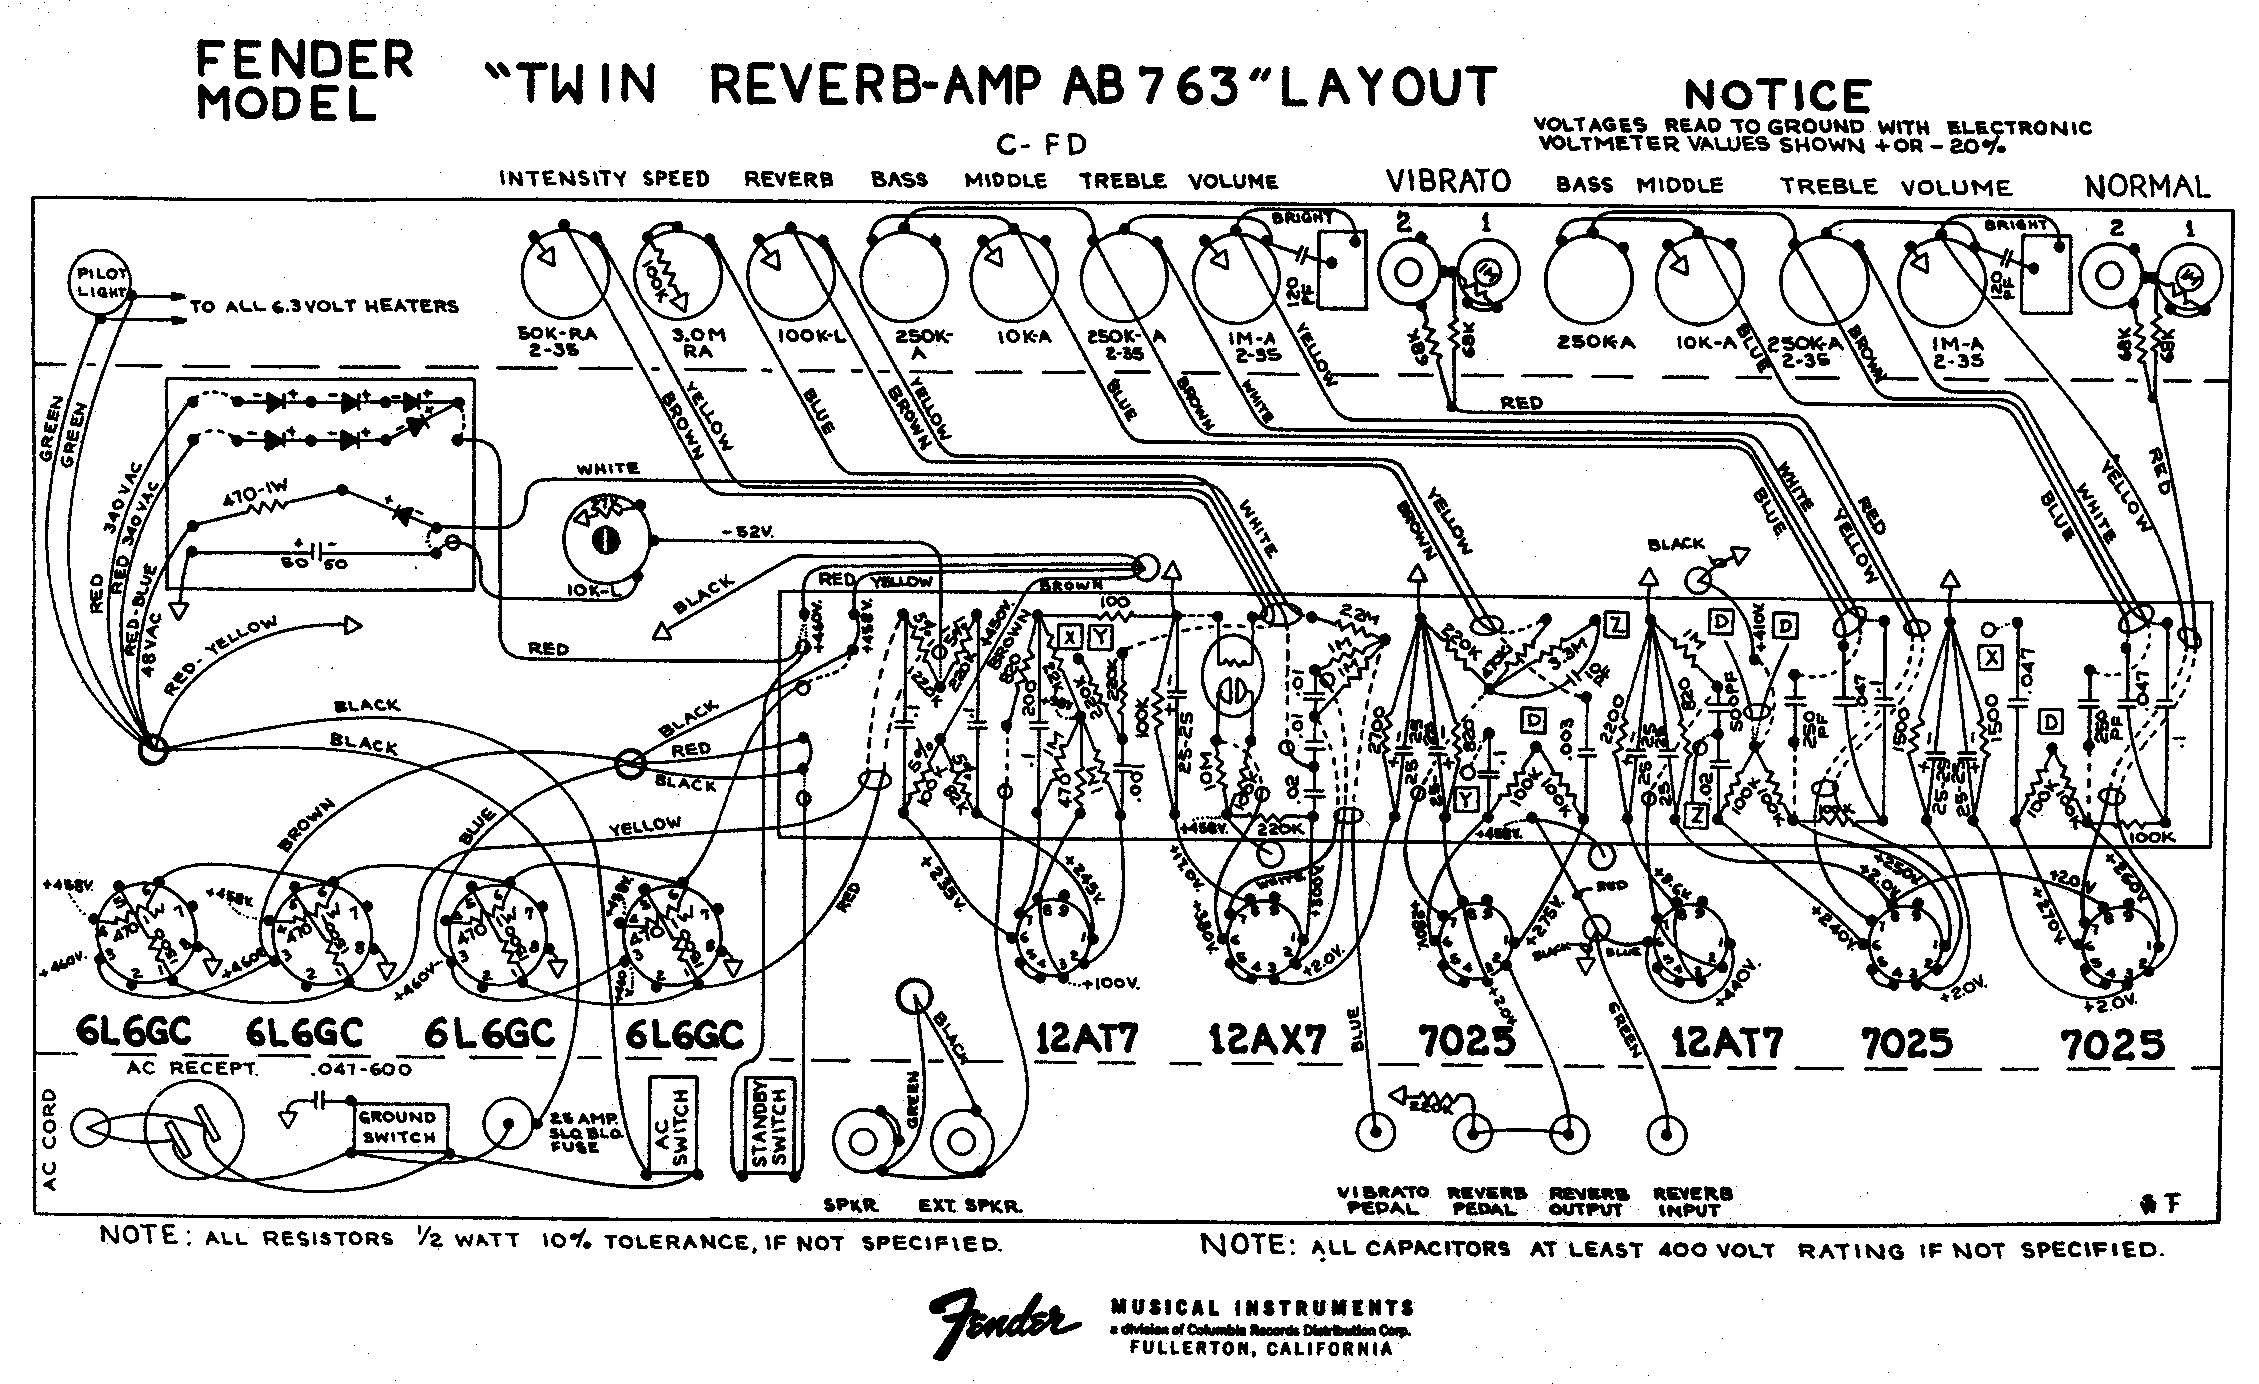 twin reverb ab763 layout.pdf